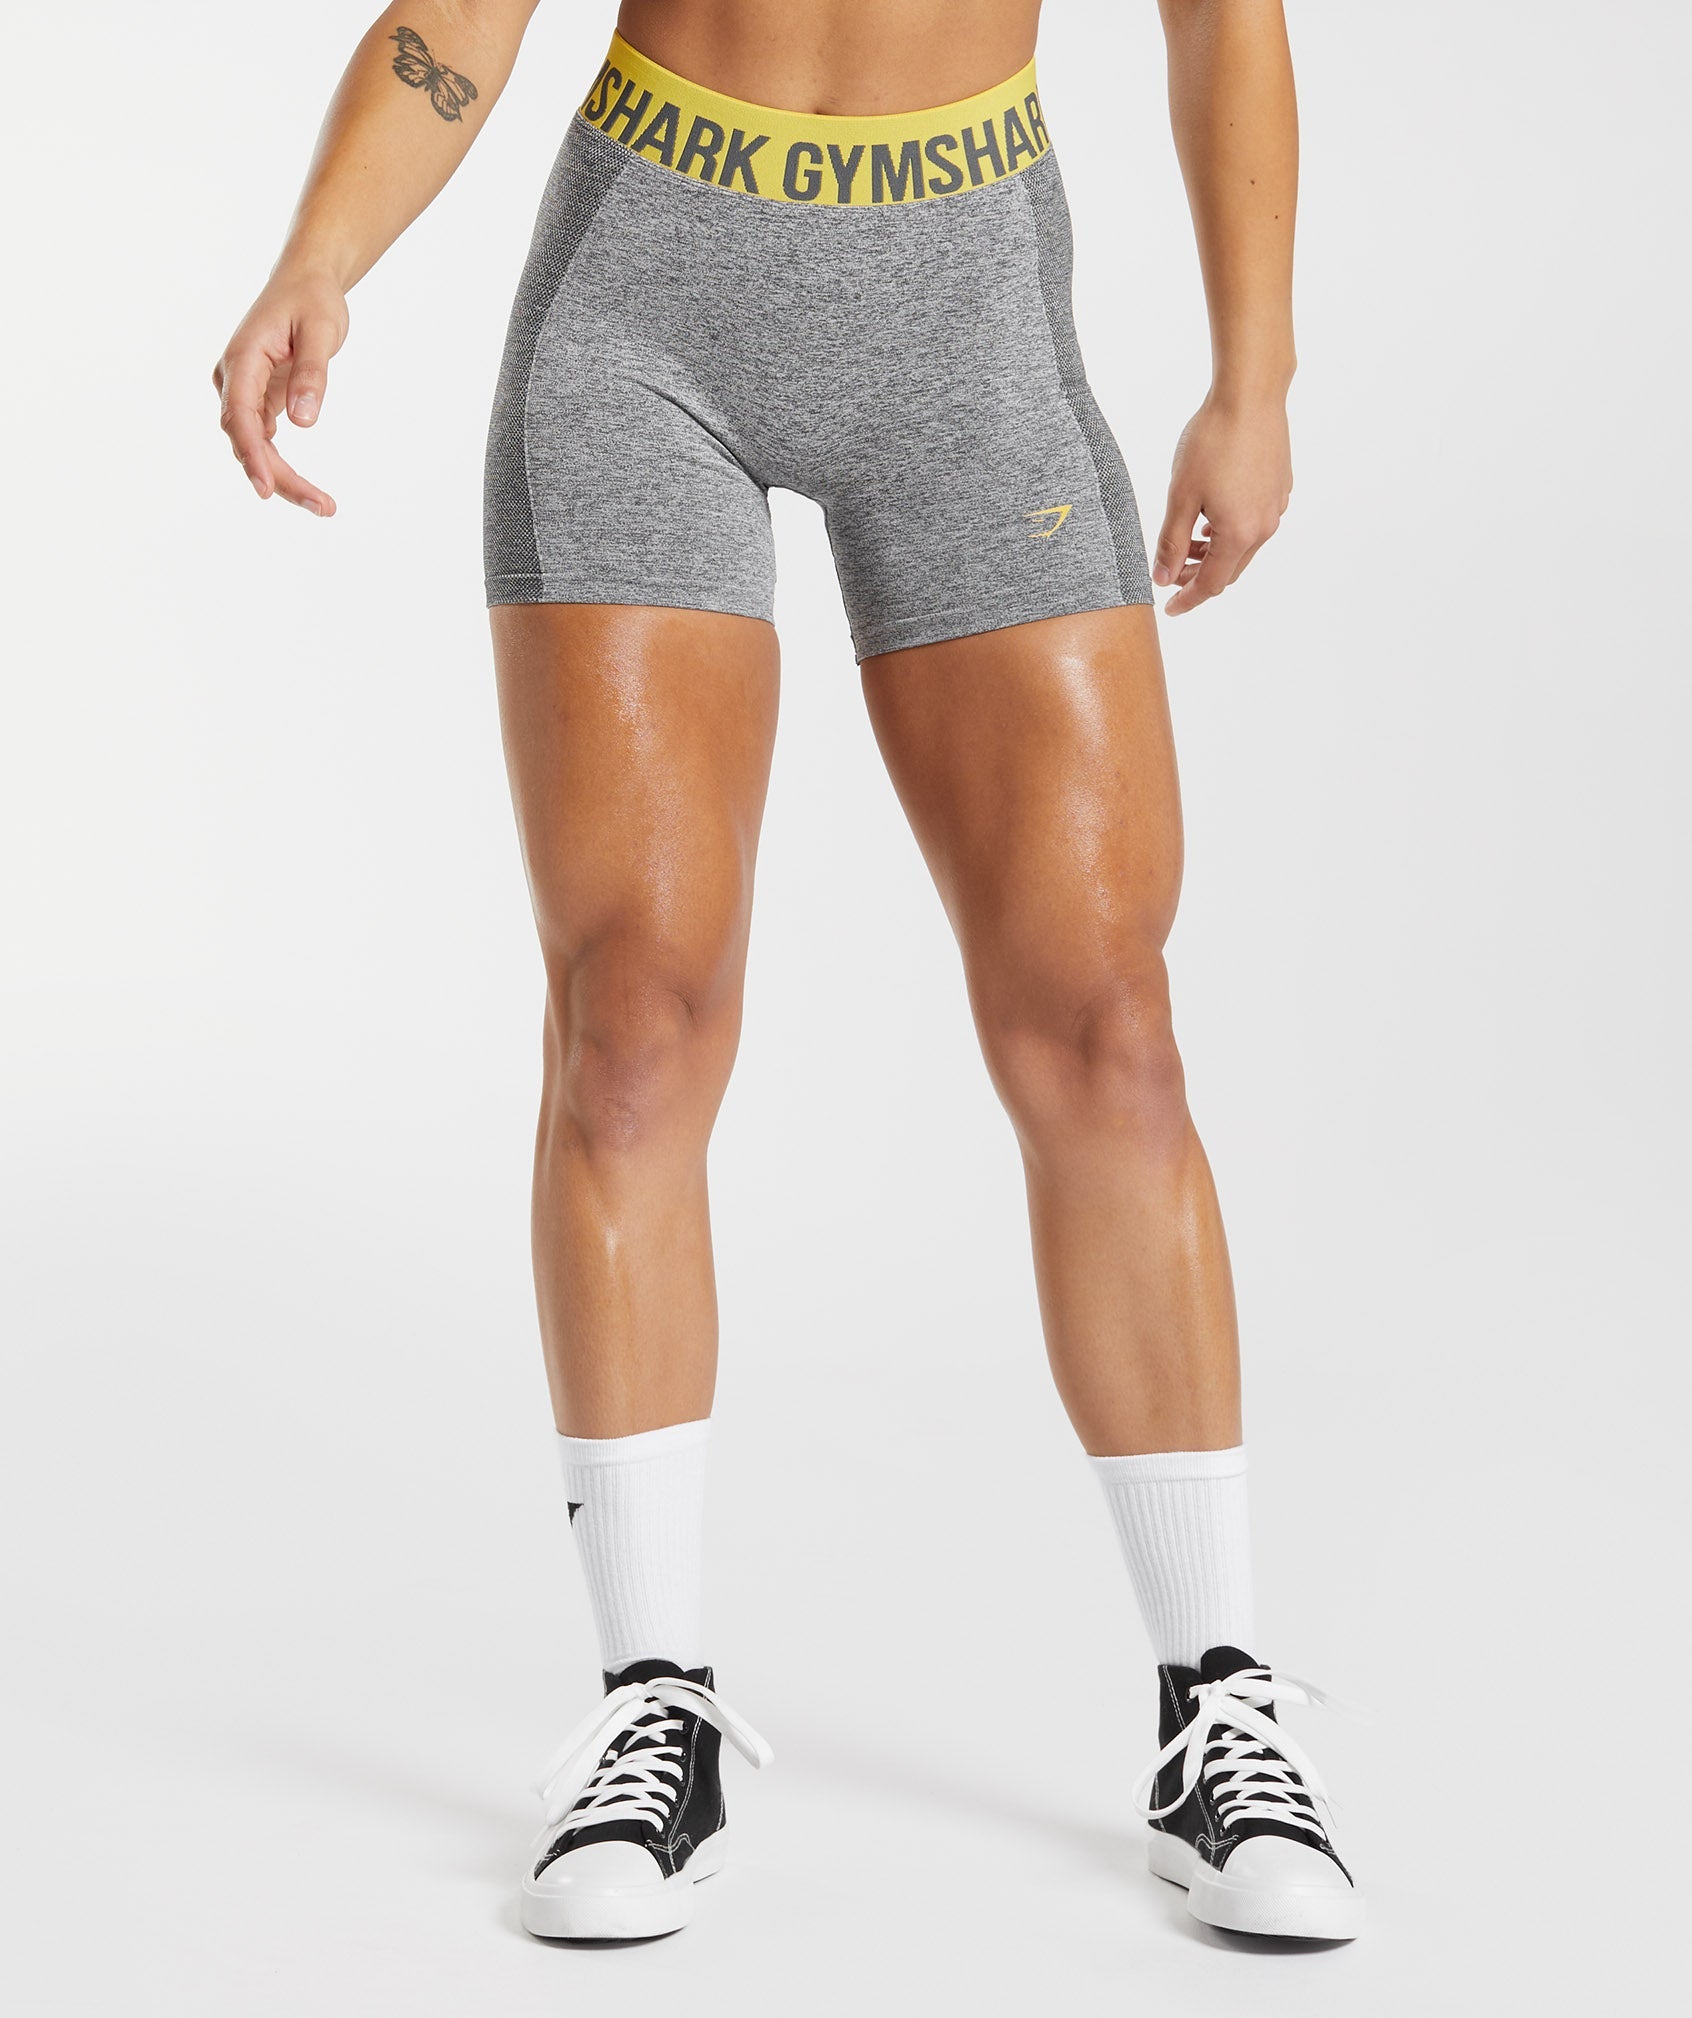 Gymshark Flex Shorts - Charcoal Grey/Medallion Yellow